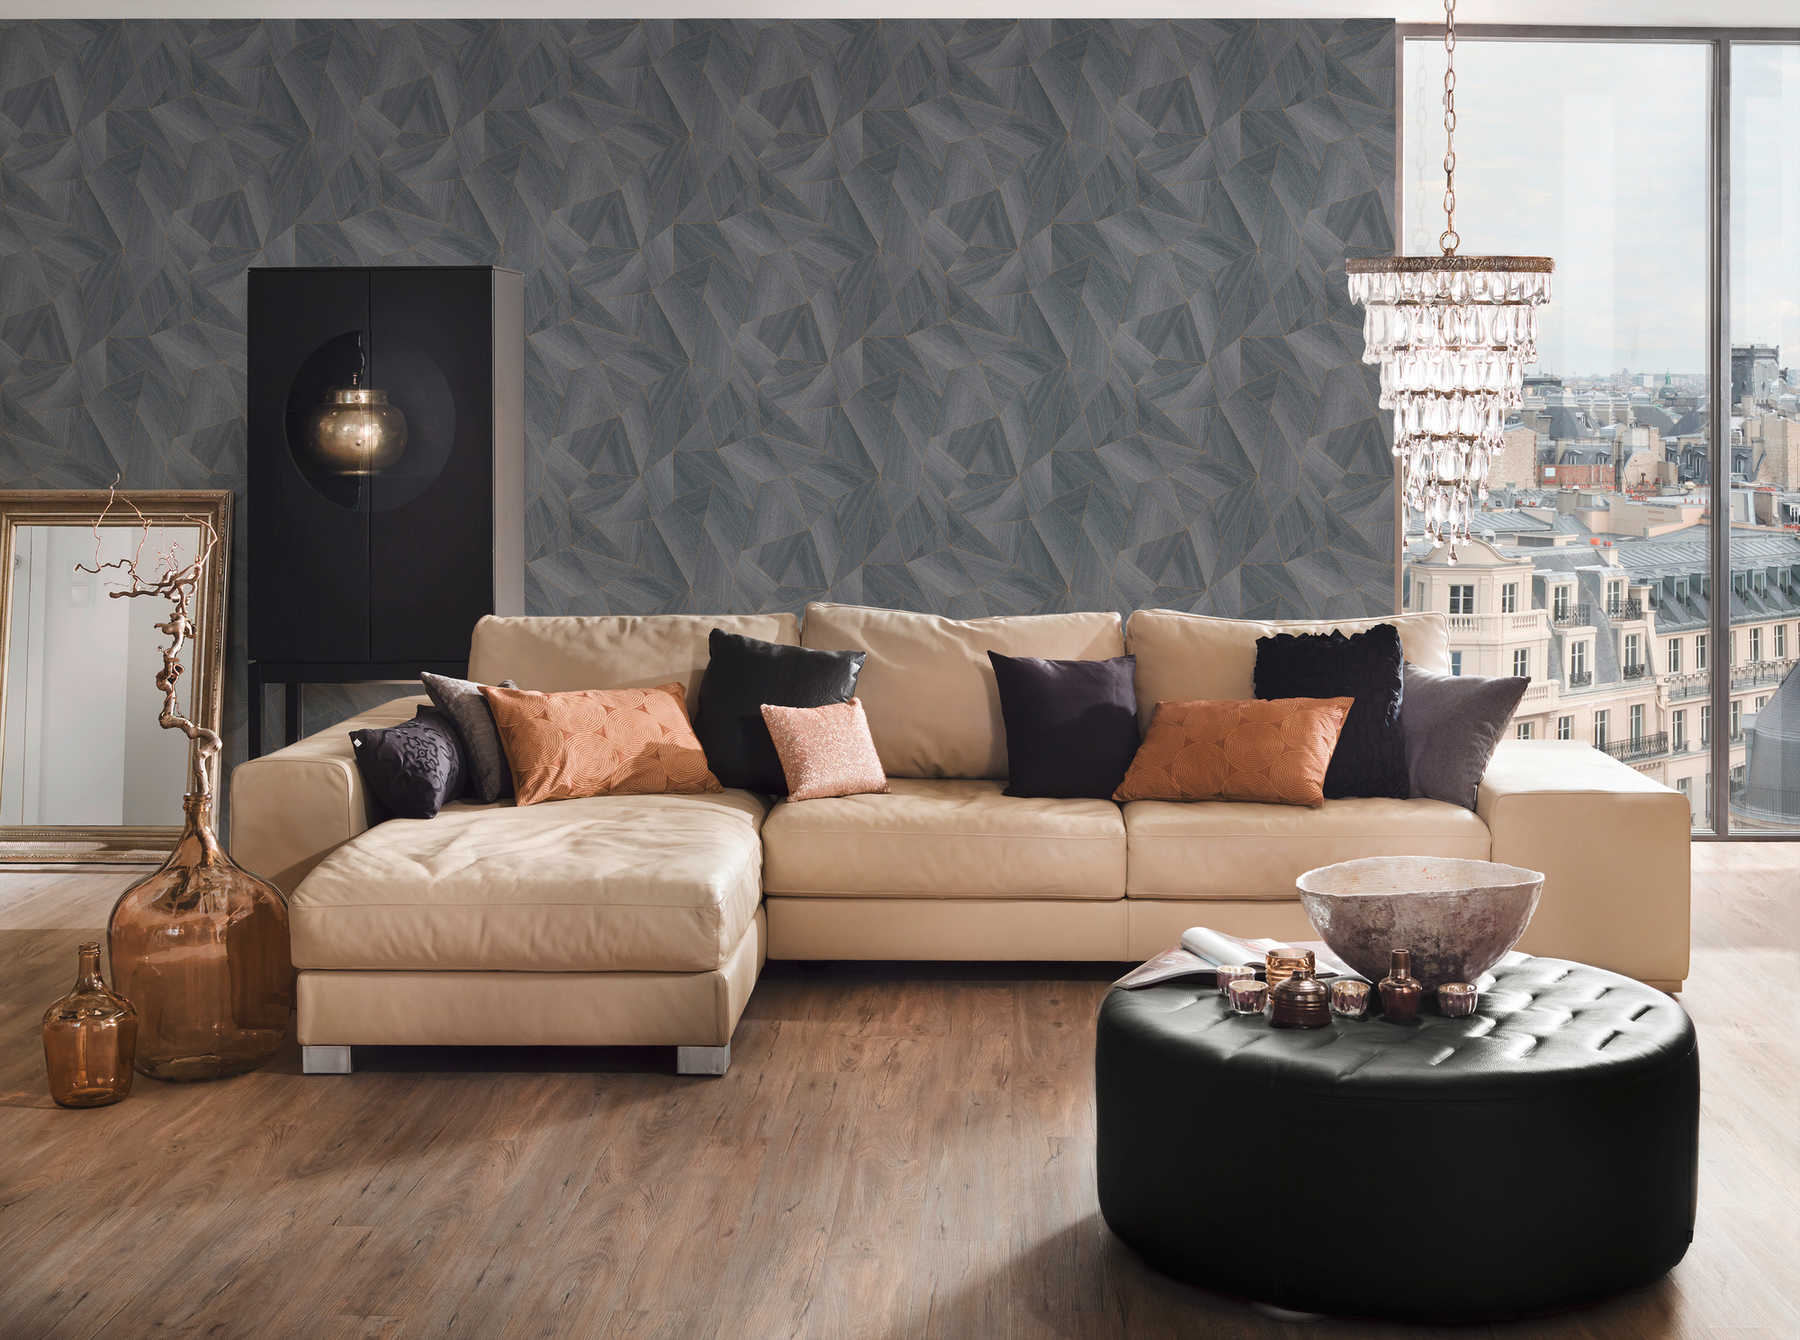             Wood wallpaper geometric pattern & metallic effect - grey, black
        